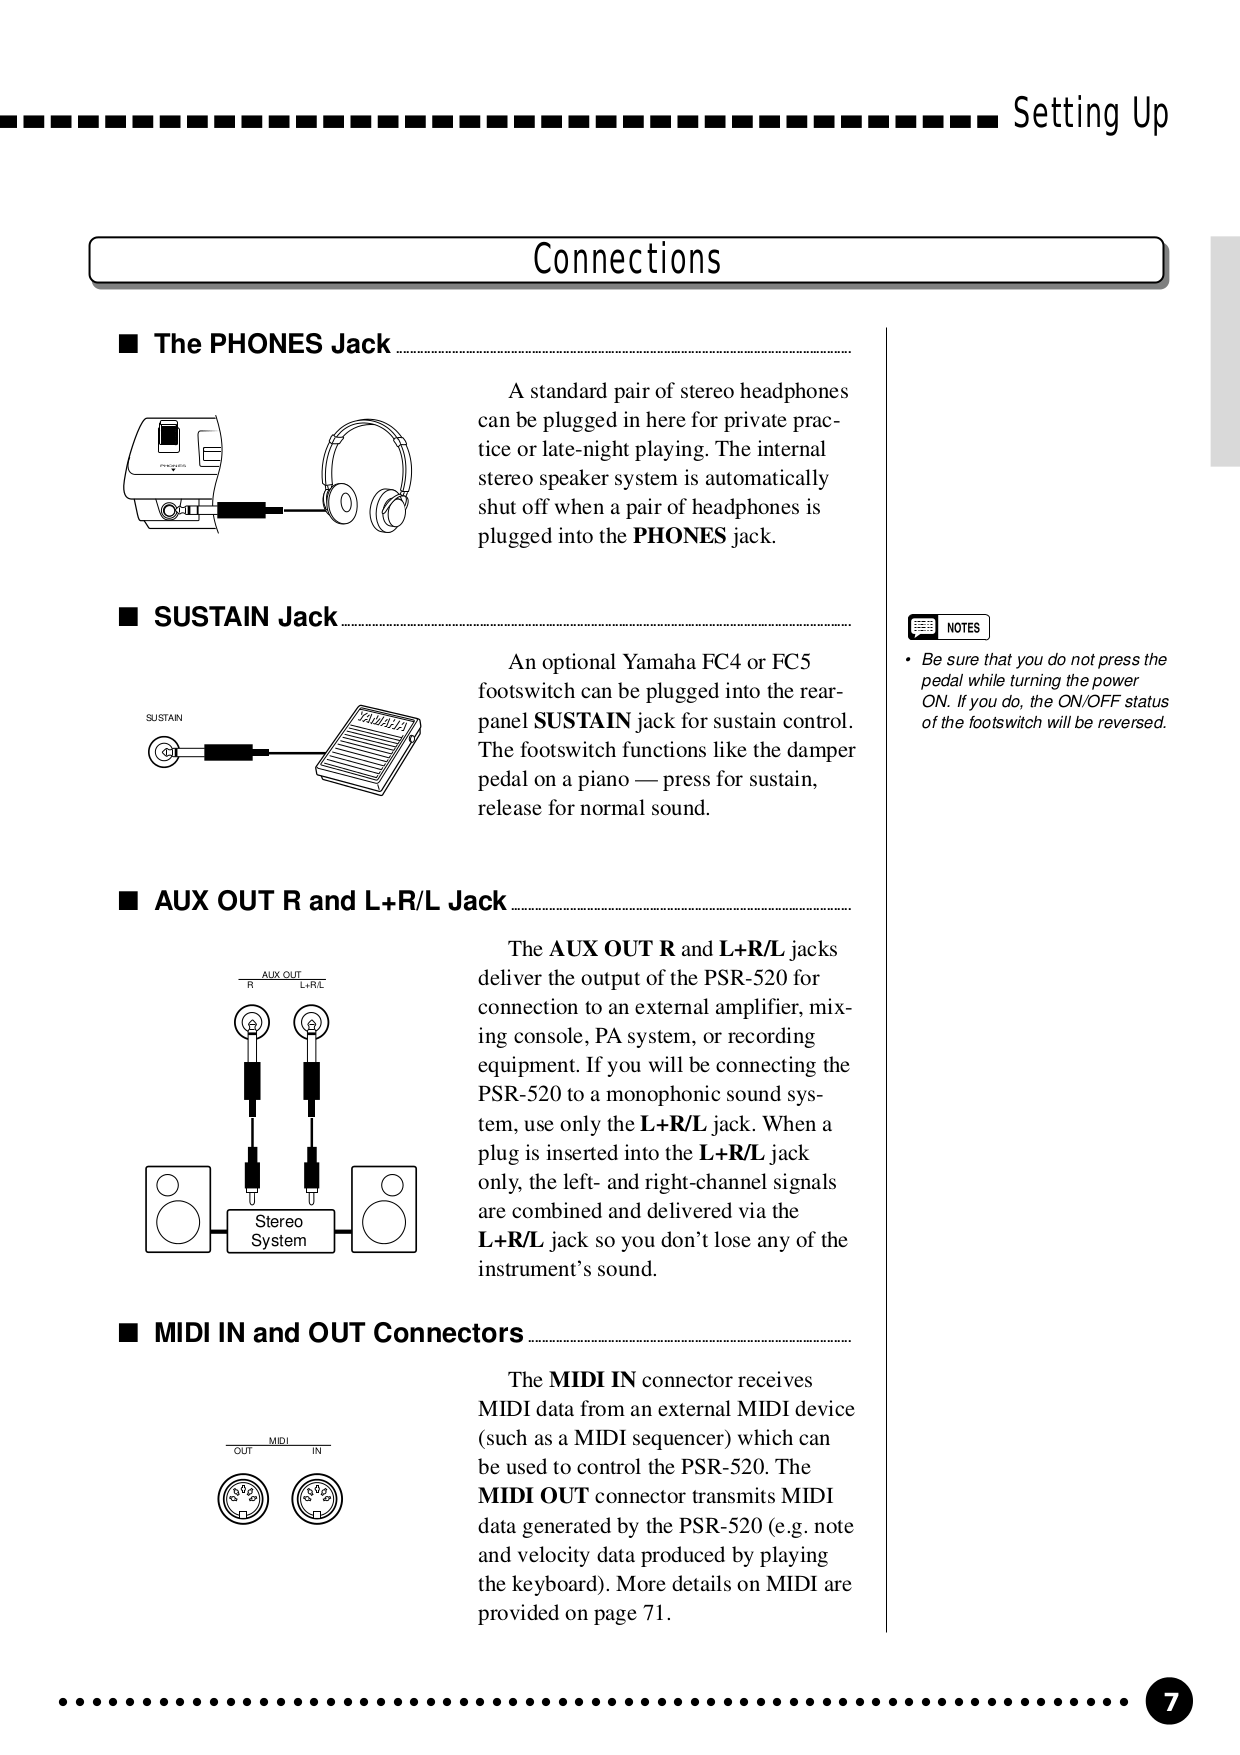 PDF manual for Yamaha Music Keyboard PSR-520